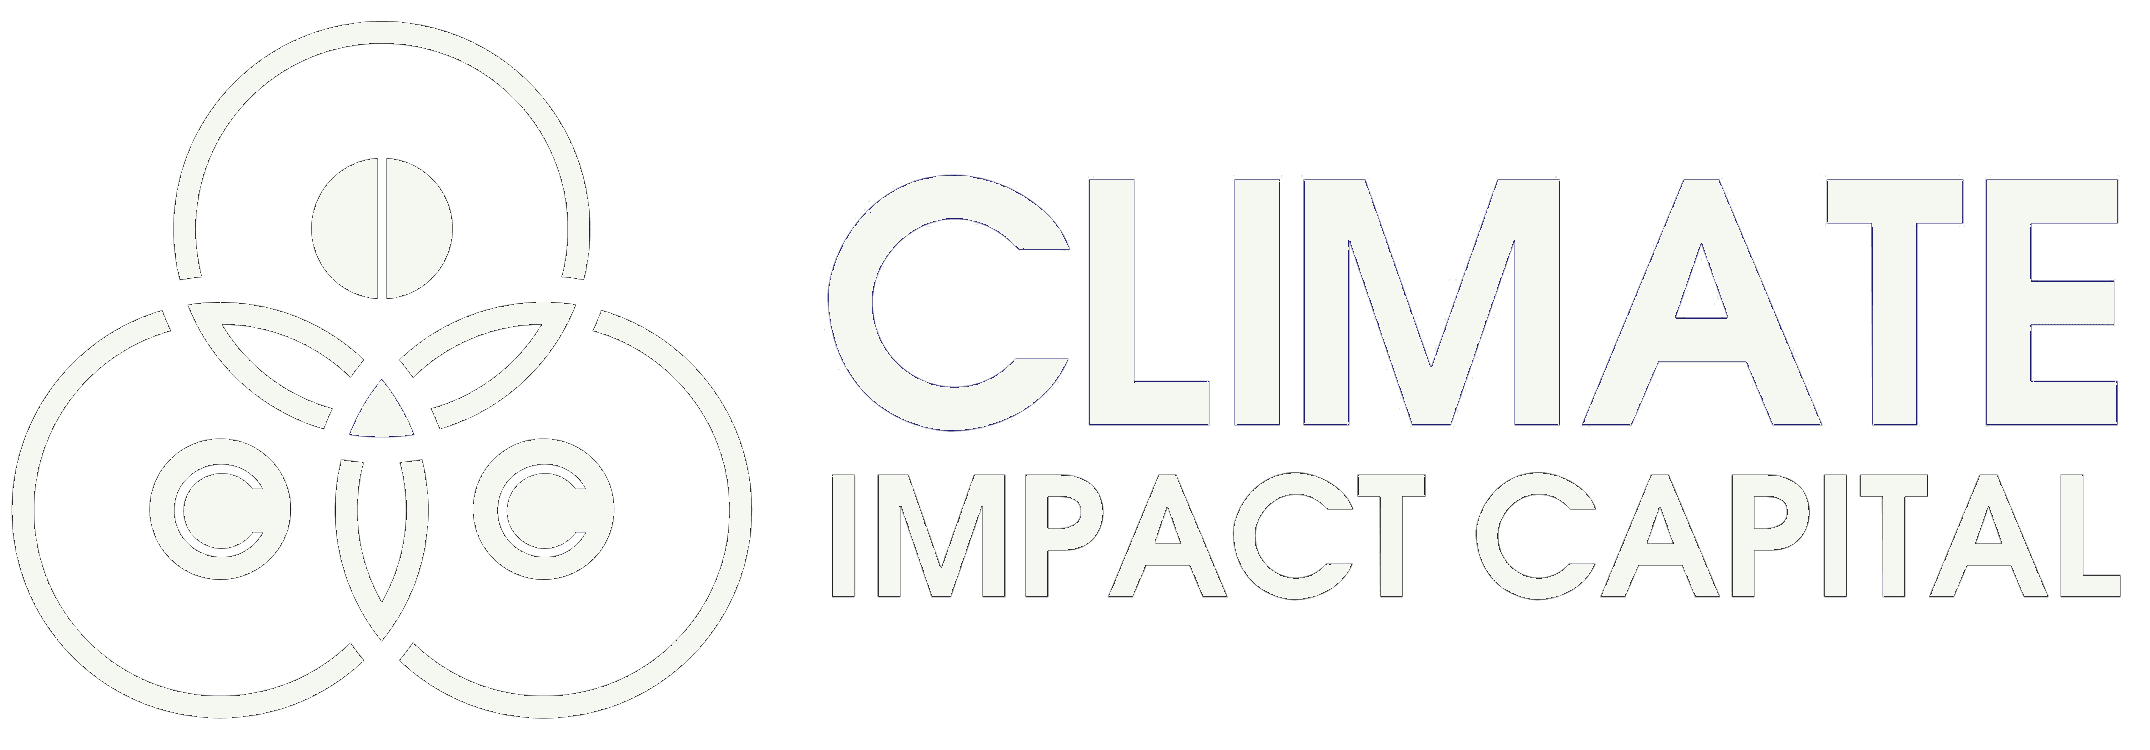 Climate Impact Capital